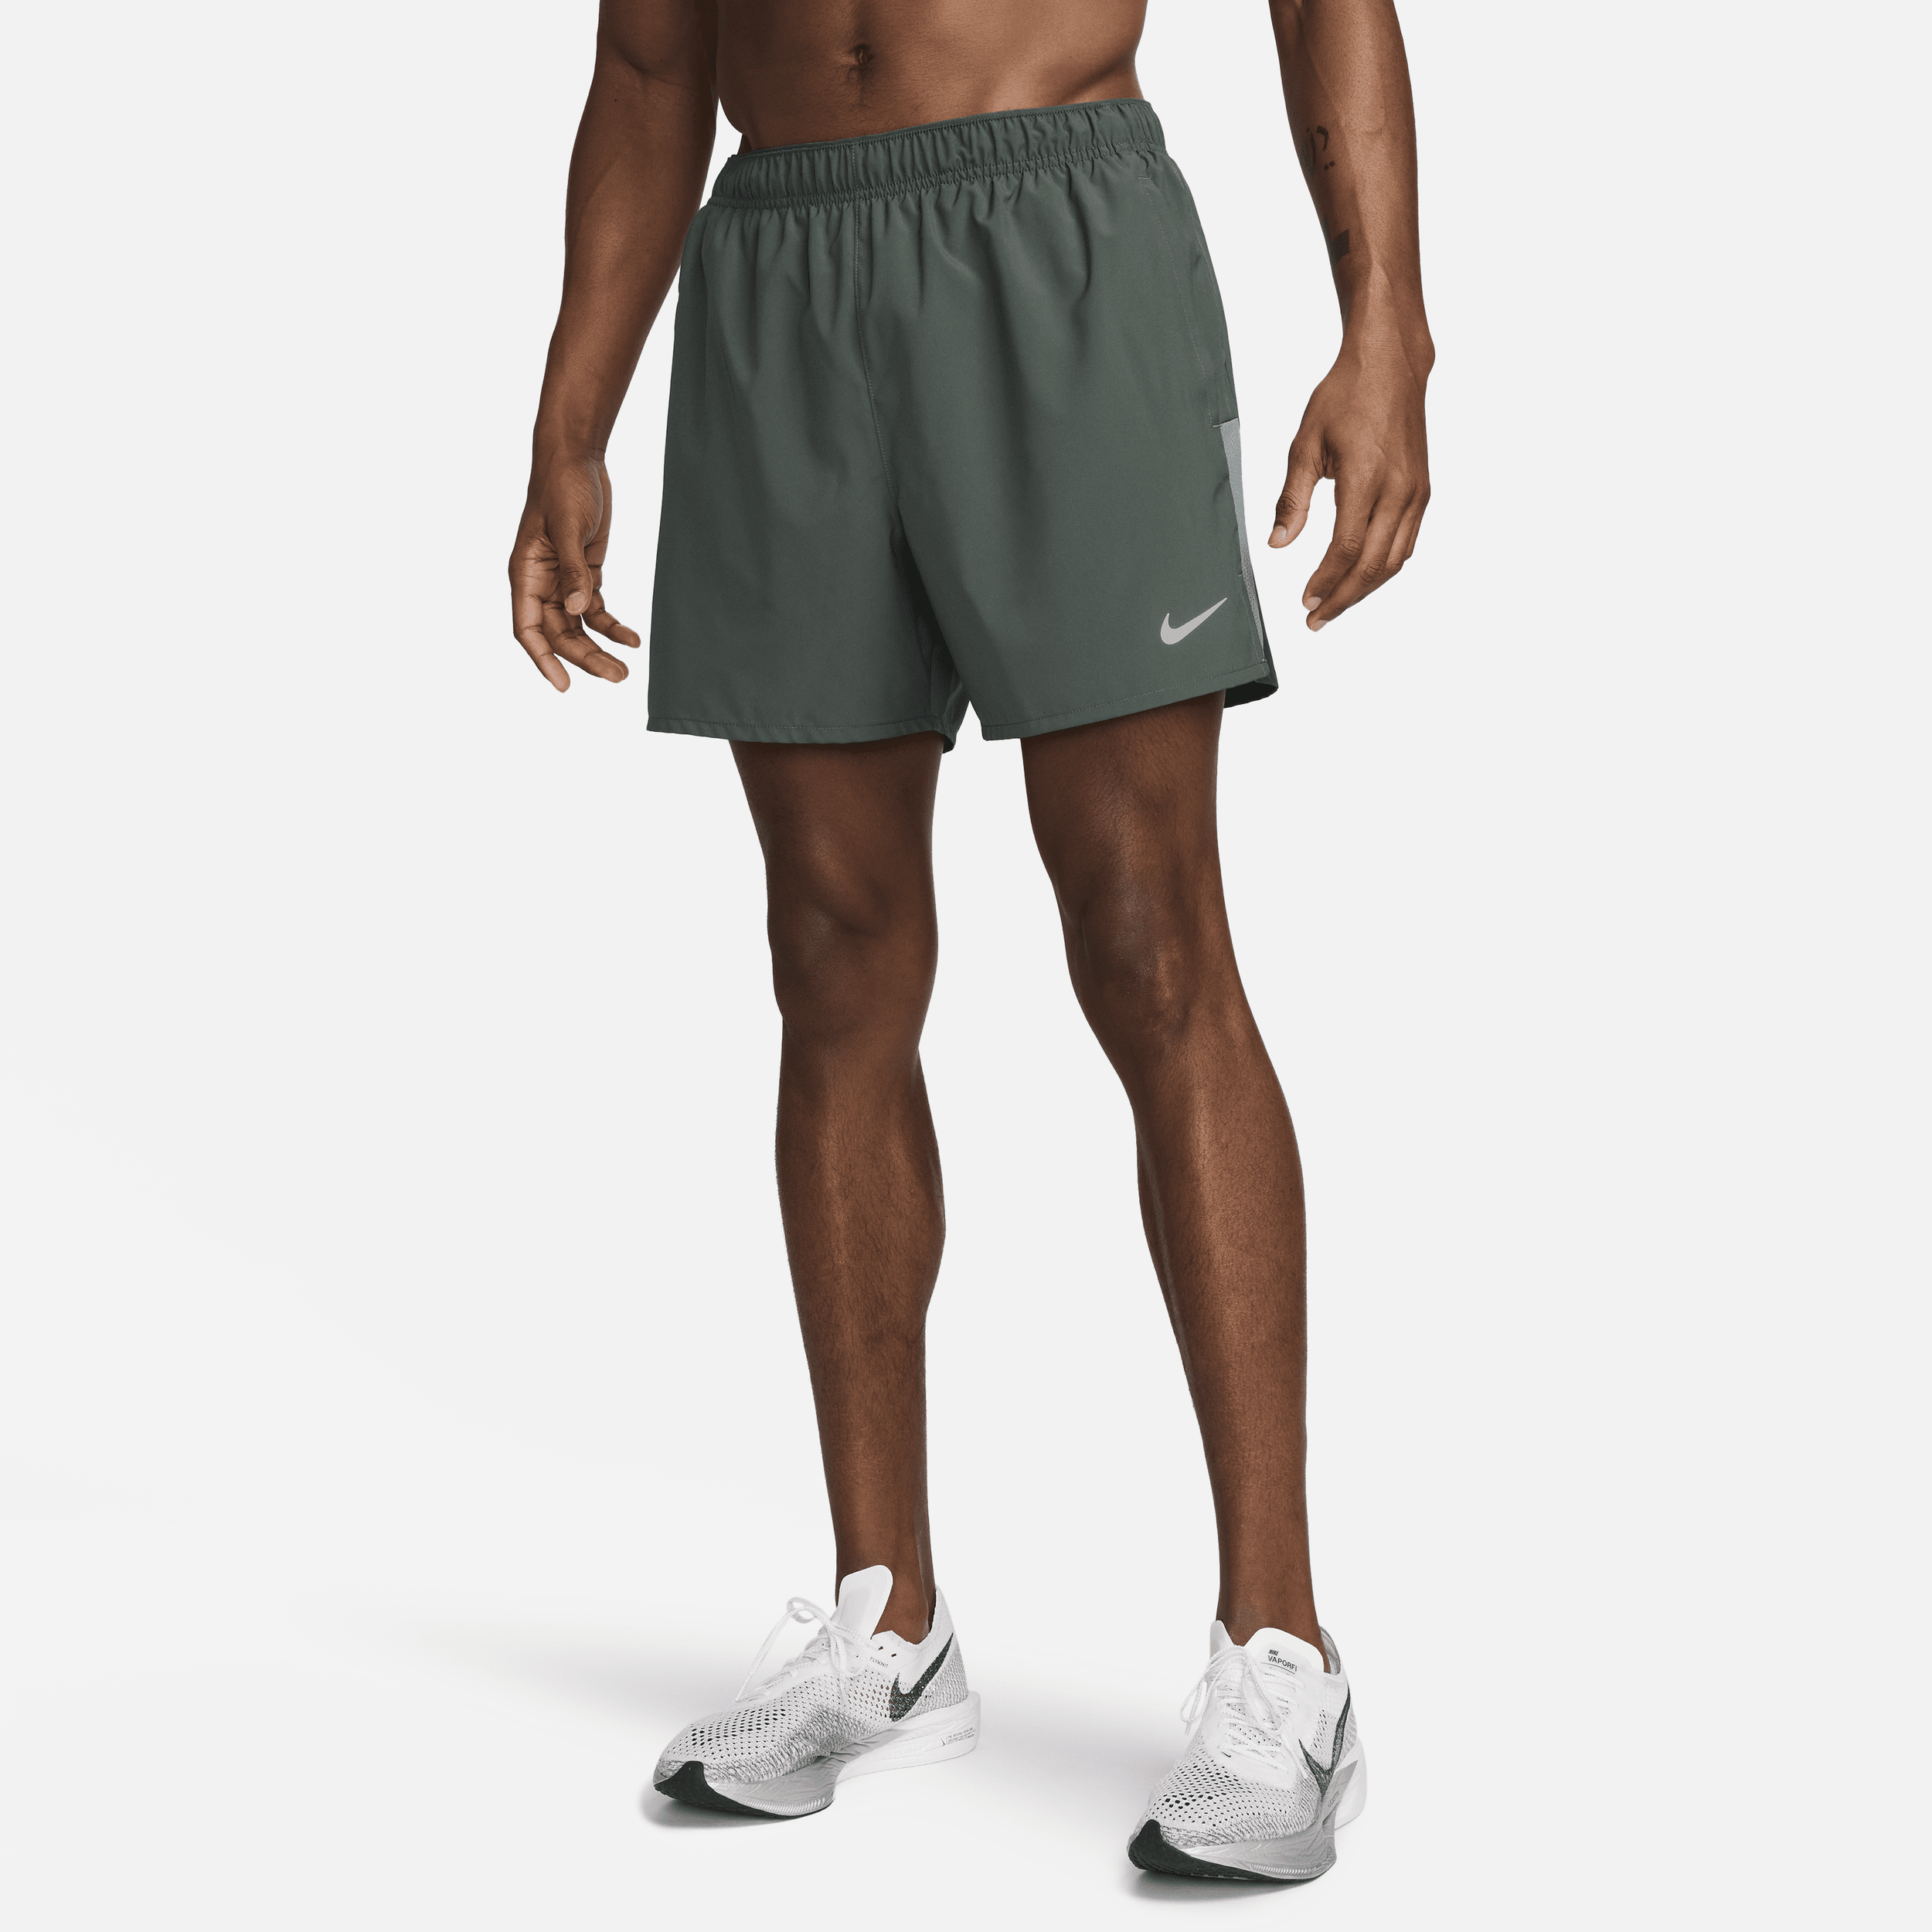 Shorts da running Dri-FIT con slip foderati 13 cm Nike Challenger – Uomo - Verde